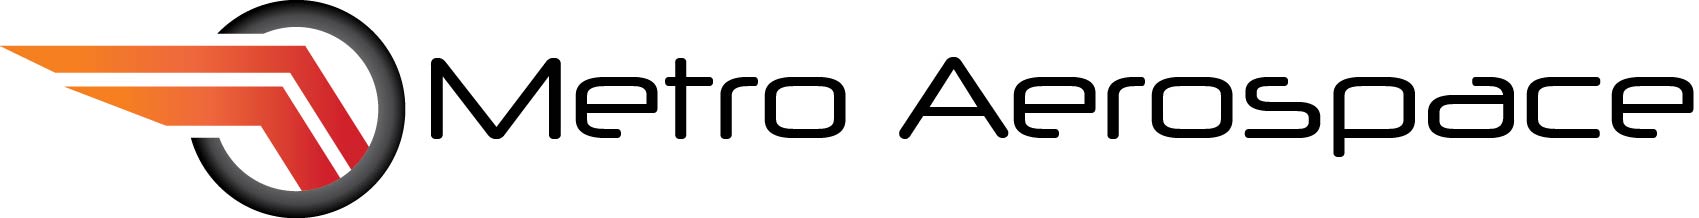 Metro Aerospace Logo